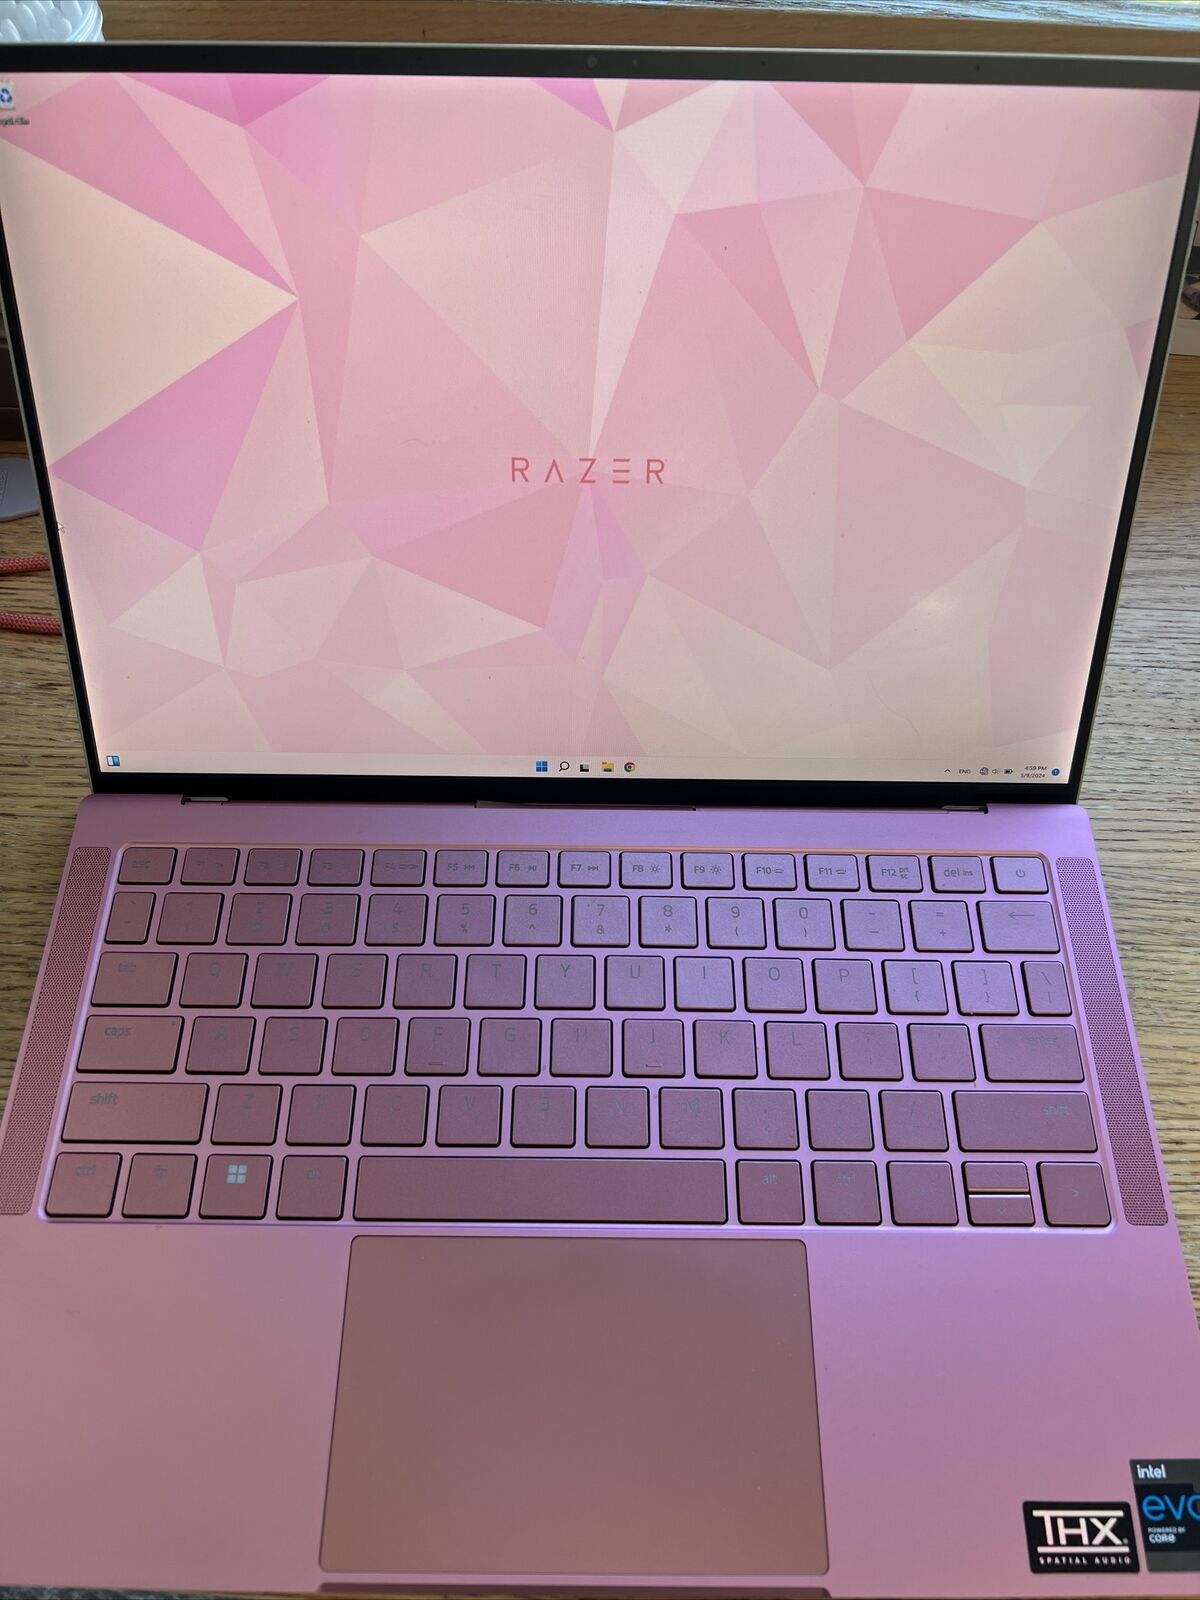 razer pink laptop: 256GB, 13.4 display, Memory 8GB, 11th gen, Windows 11th,